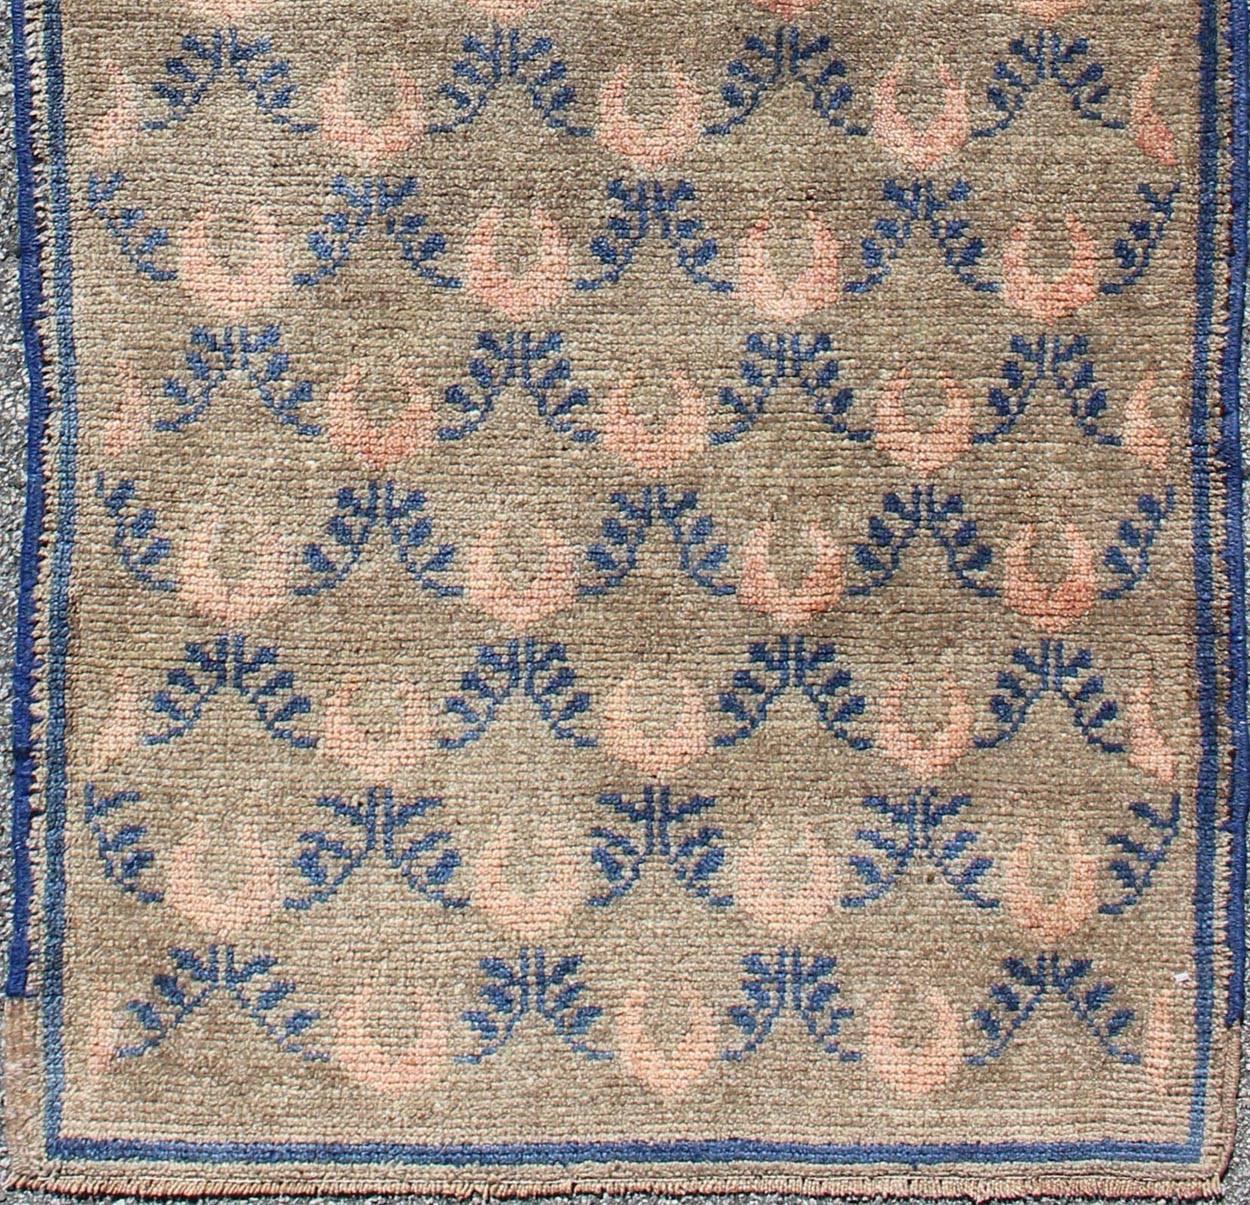 All-over ivory wreath design vintage Turkish Oushak rug, rug en-603, country of origin / type: Turkey / Tulu, circa mid-20th century

This vintage Turkish Tulu carpet, (circa mid-20th century) features an all-over pattern of vining latticework